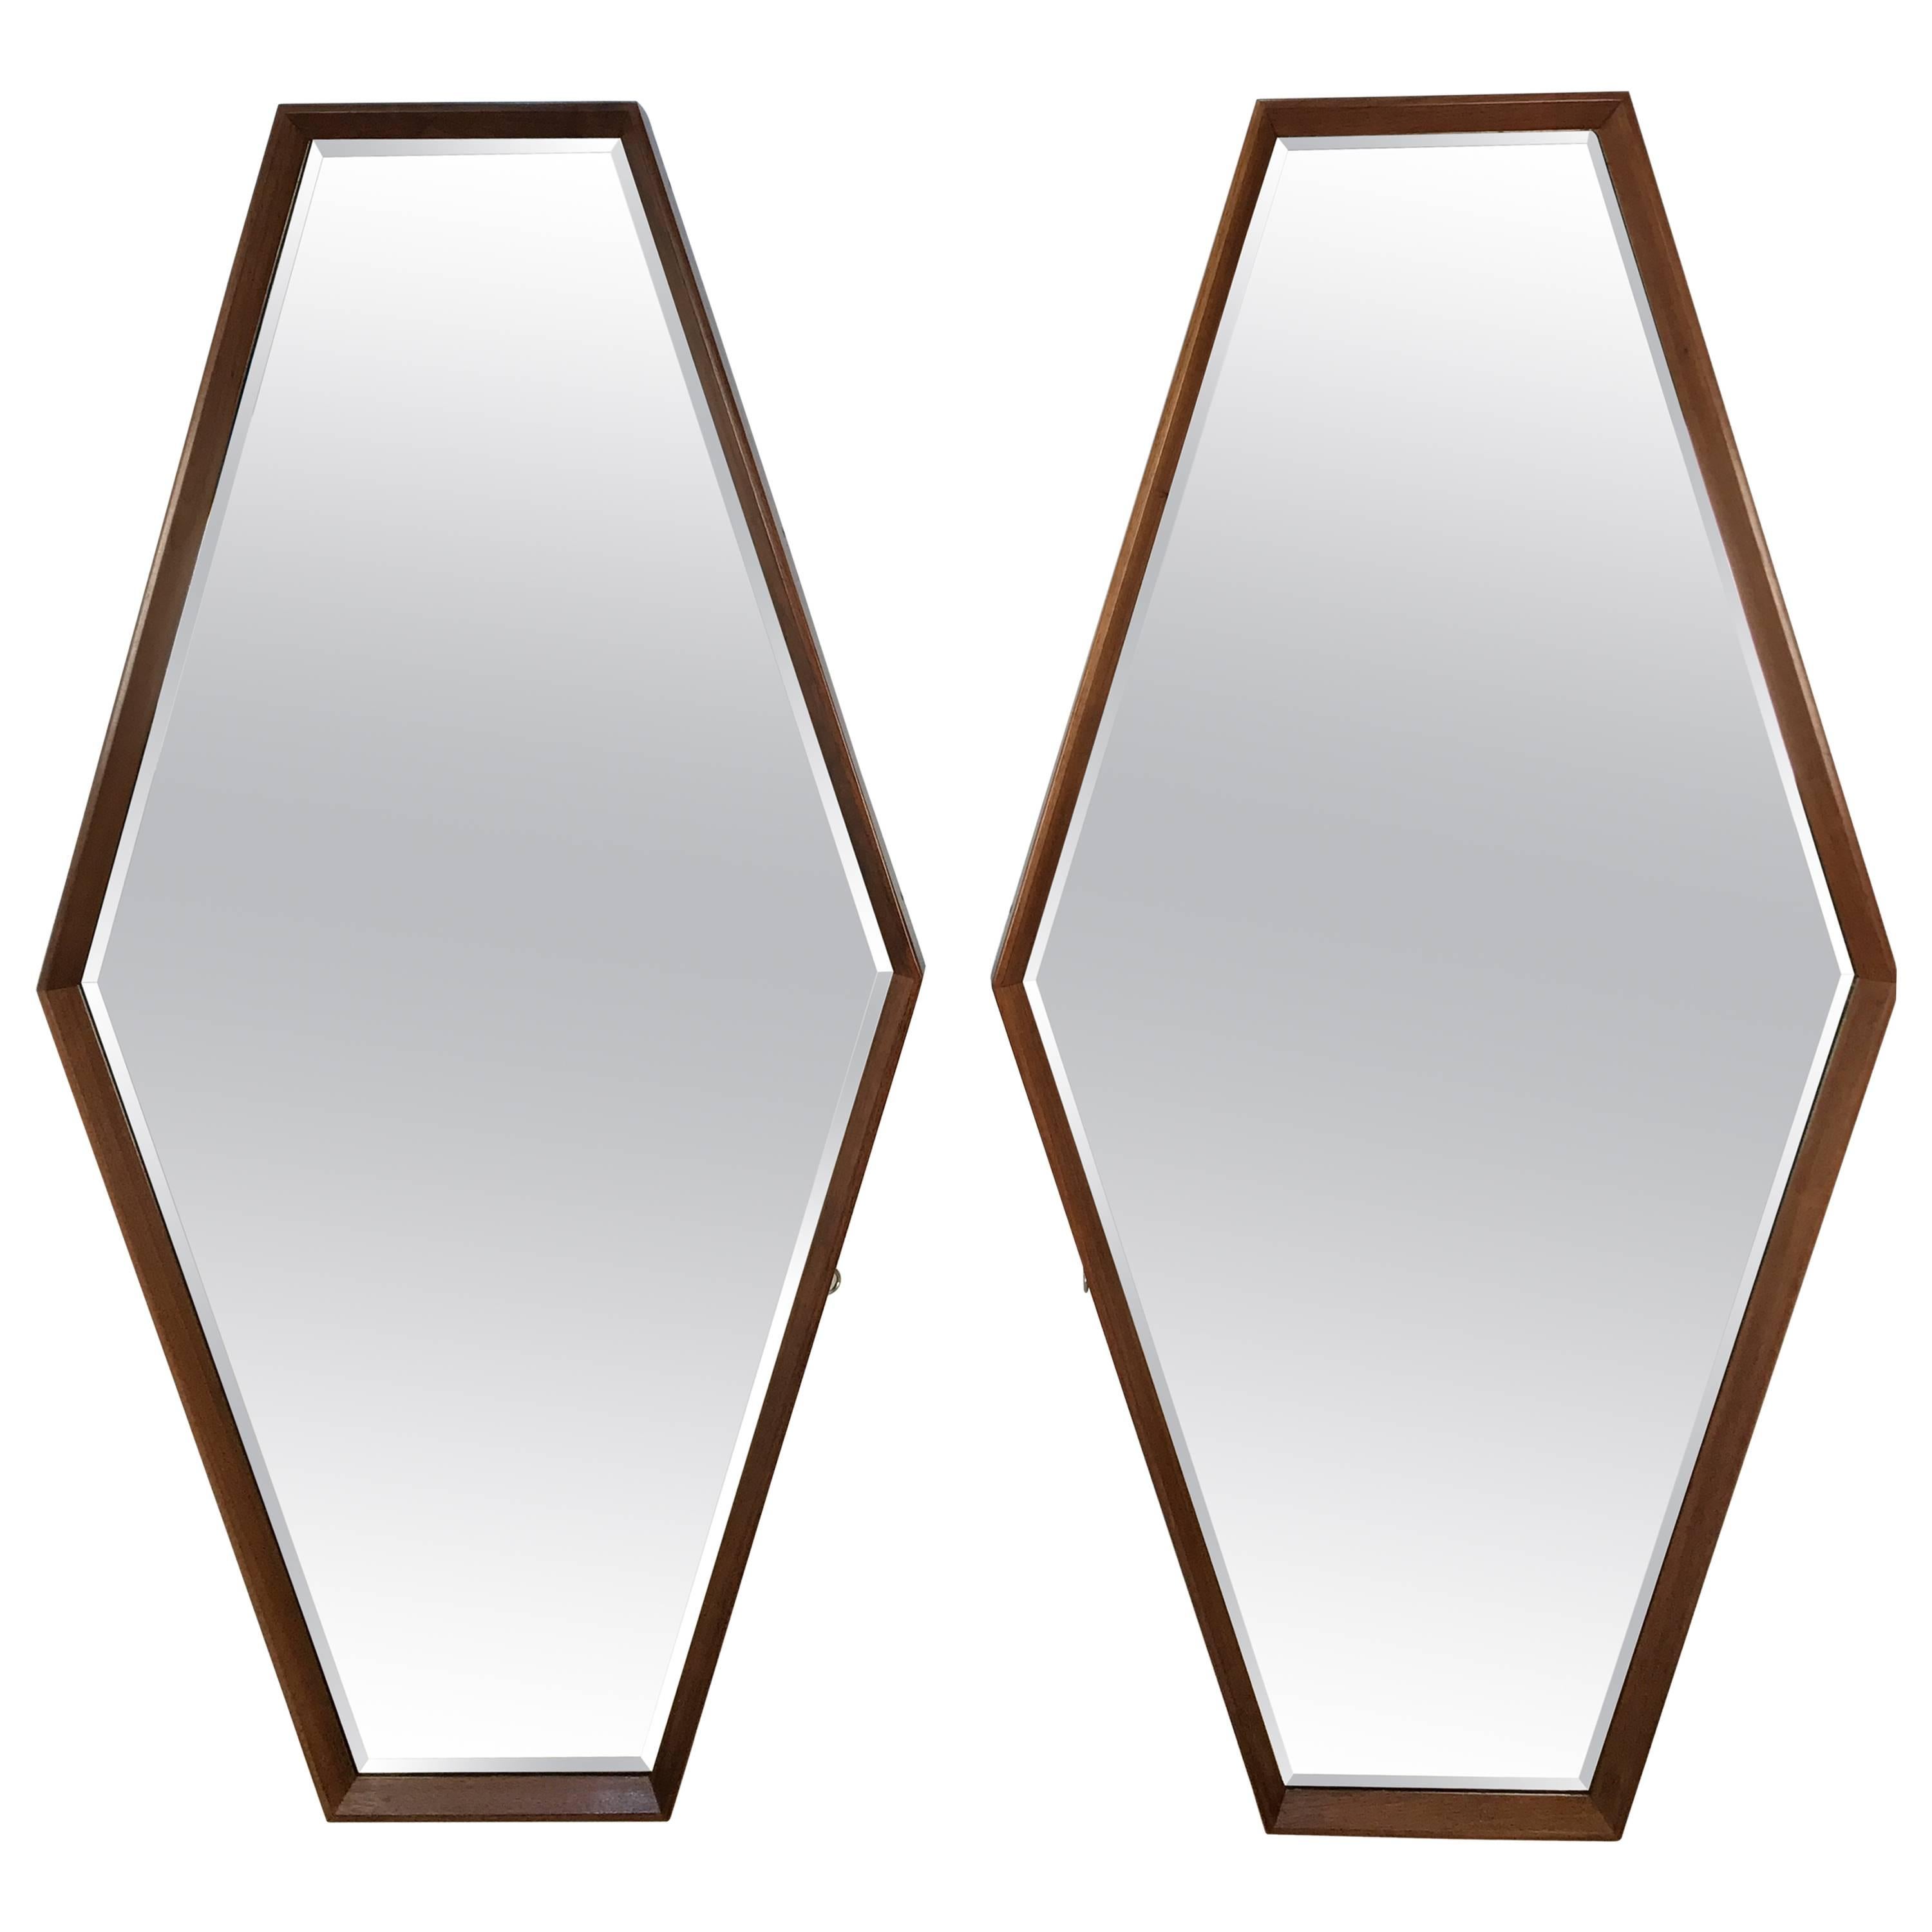 Pair of Edmond Spence Hexagon Mirrors